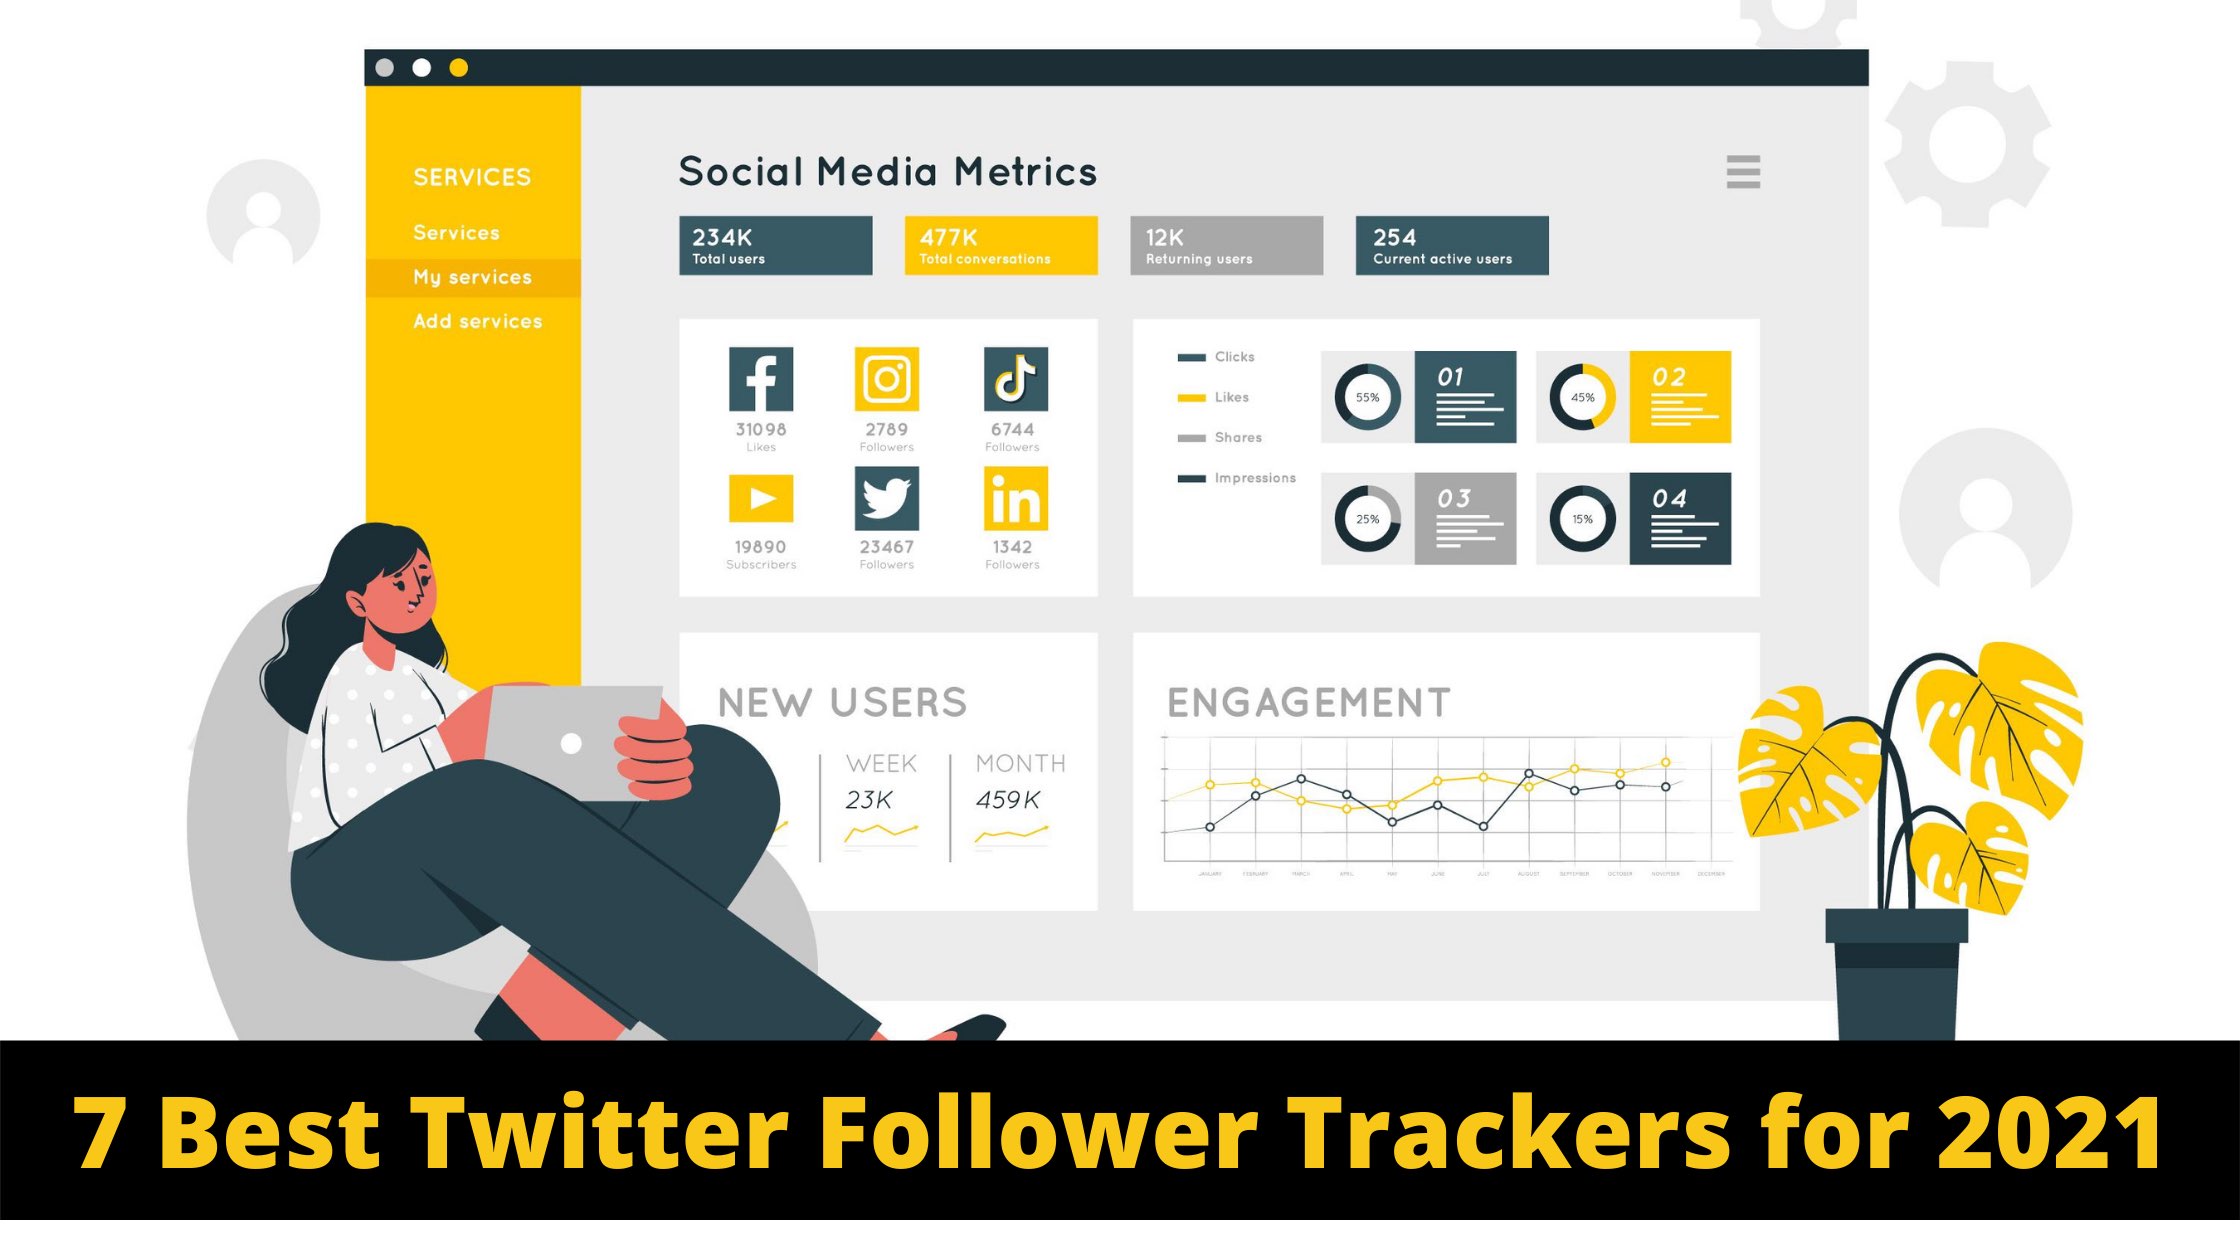 7 Best Twitter Follower Trackers for 2021